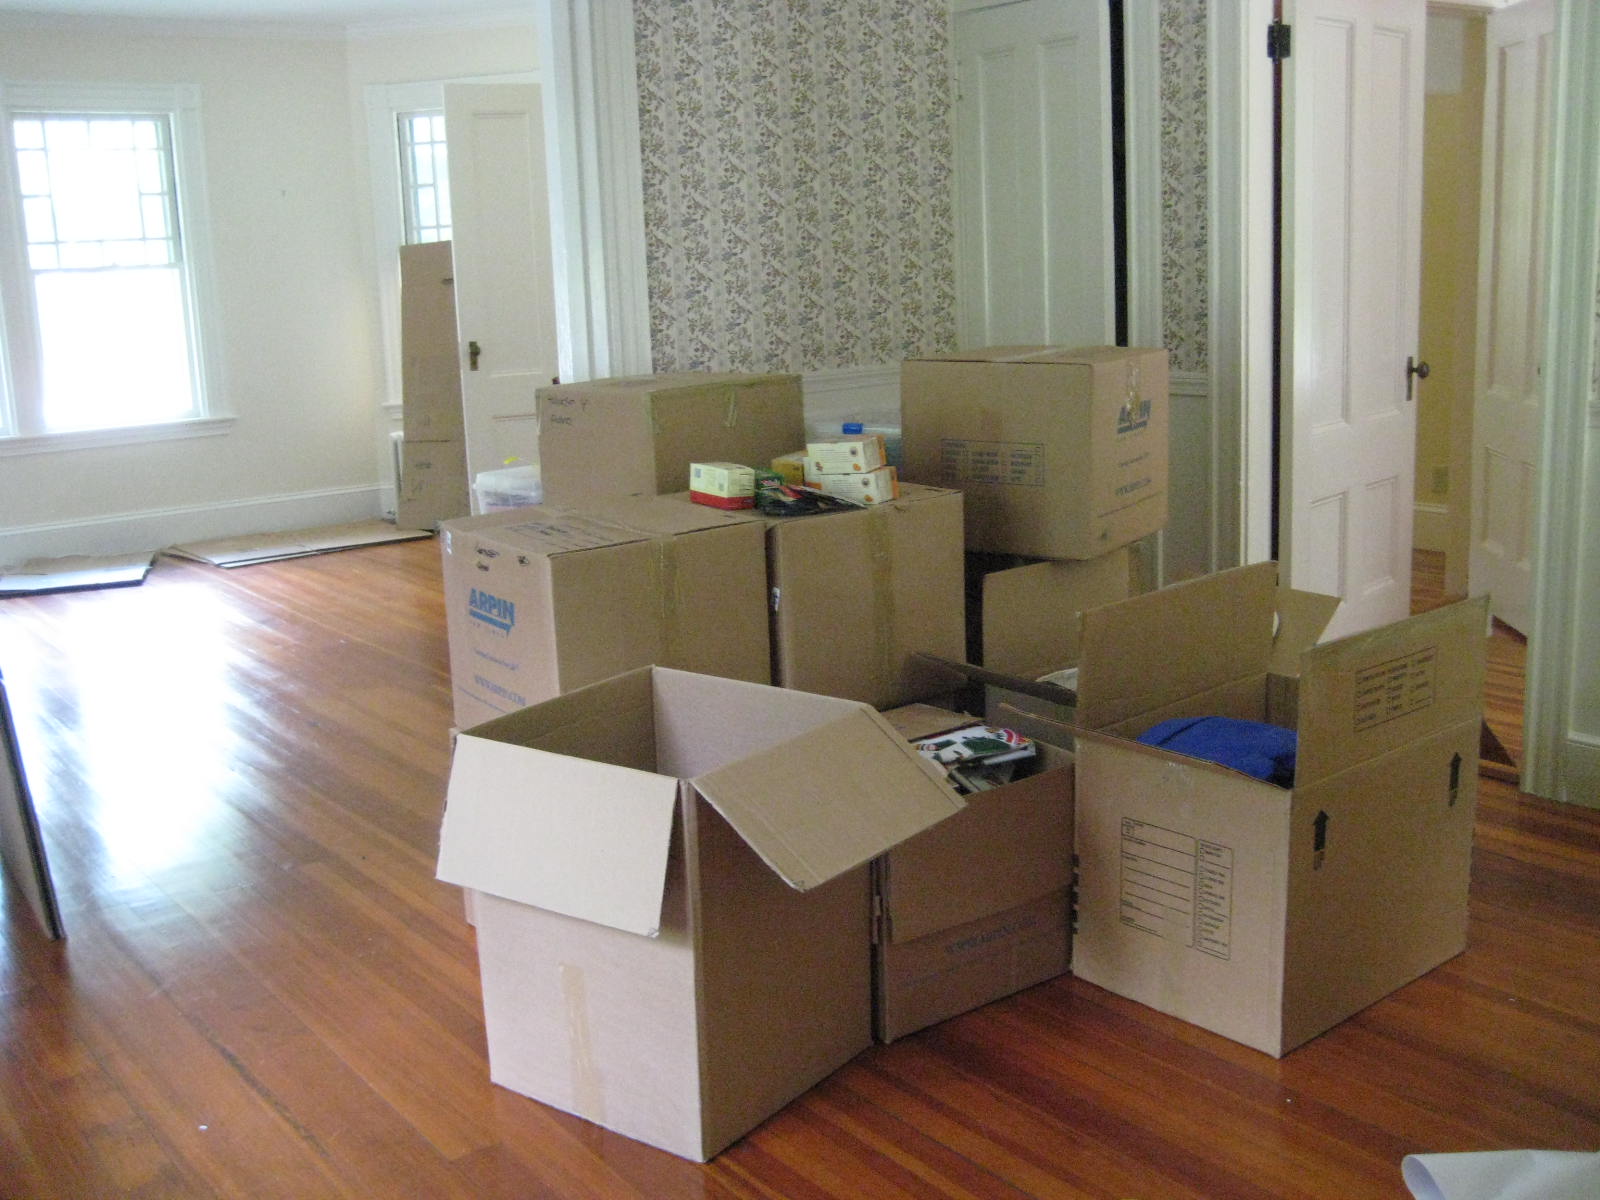 Дешево переехать. Коробки в квартире. Комната с коробками. Переезд. Коробки в комнате.